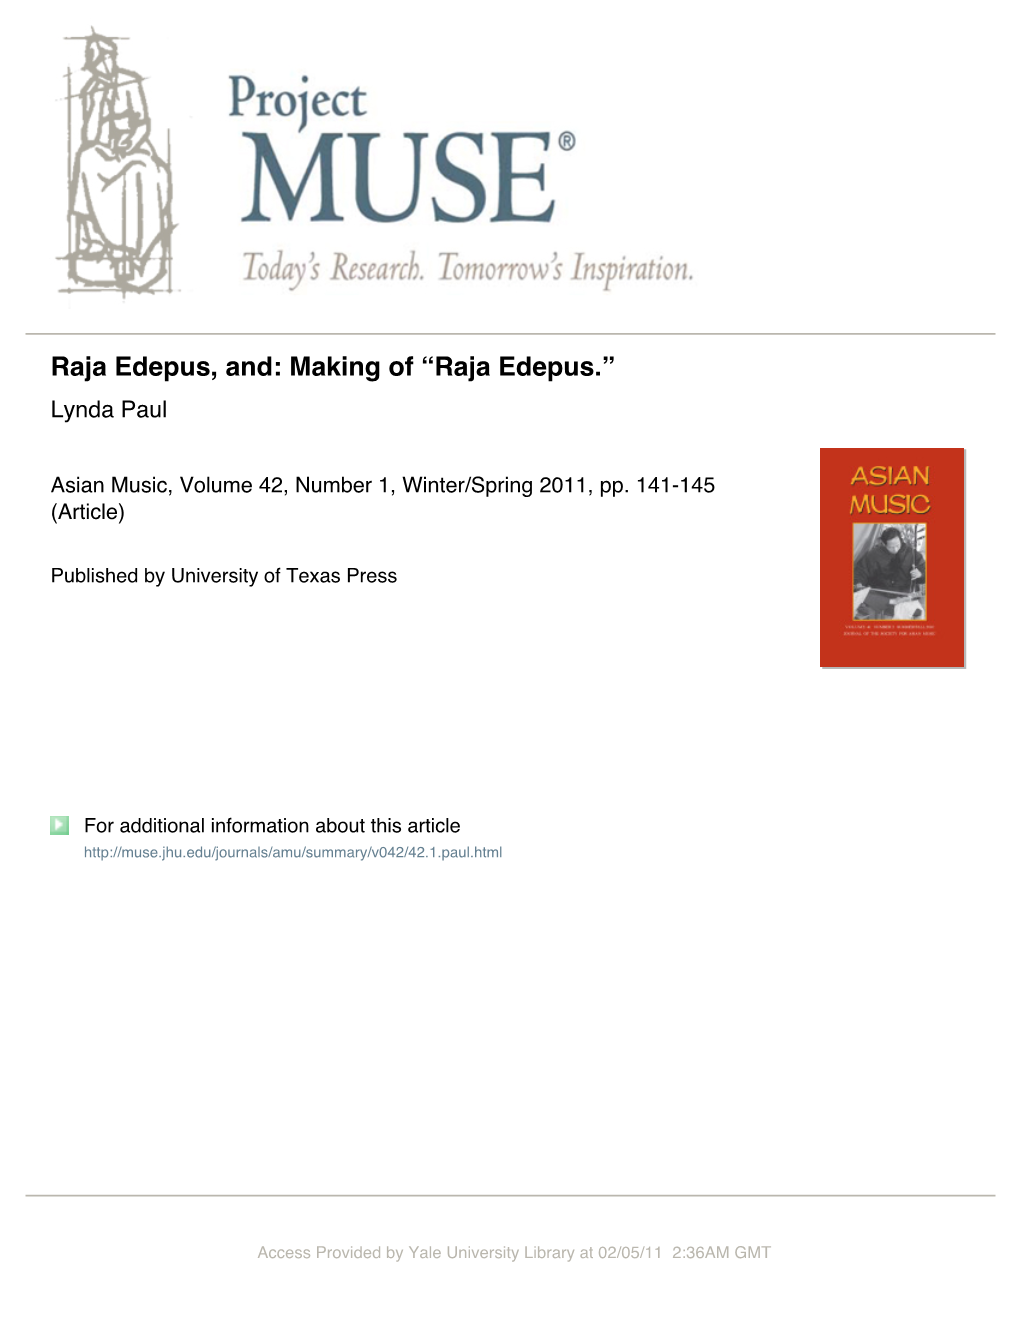 Raja Edepus, And: Making of “Raja Edepus.” Lynda Paul